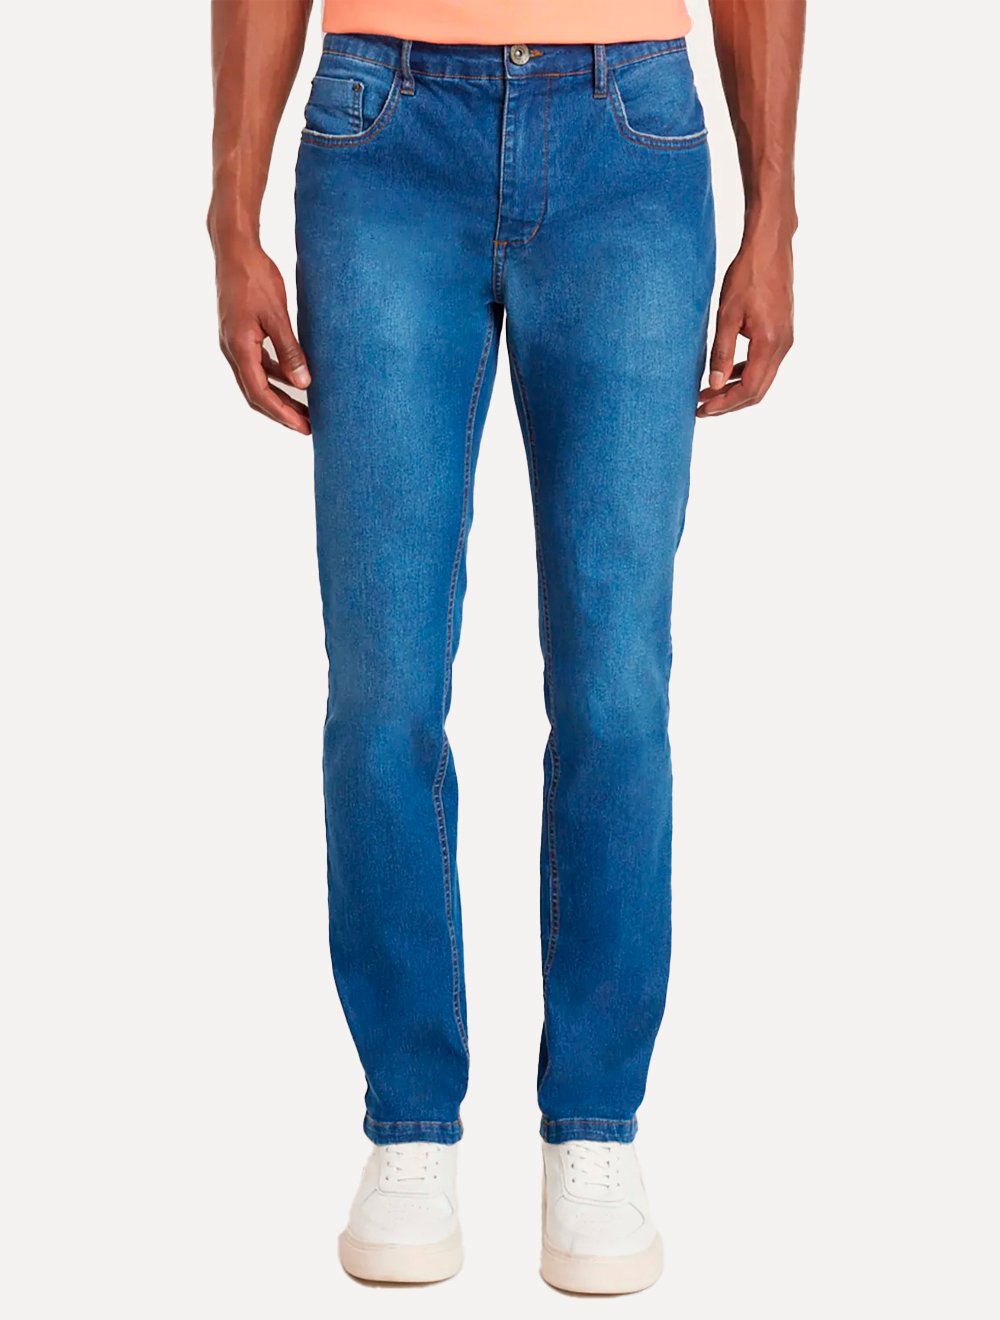 Calça Aramis Jeans Masculina Slim 5 Pockets Azul Jeans